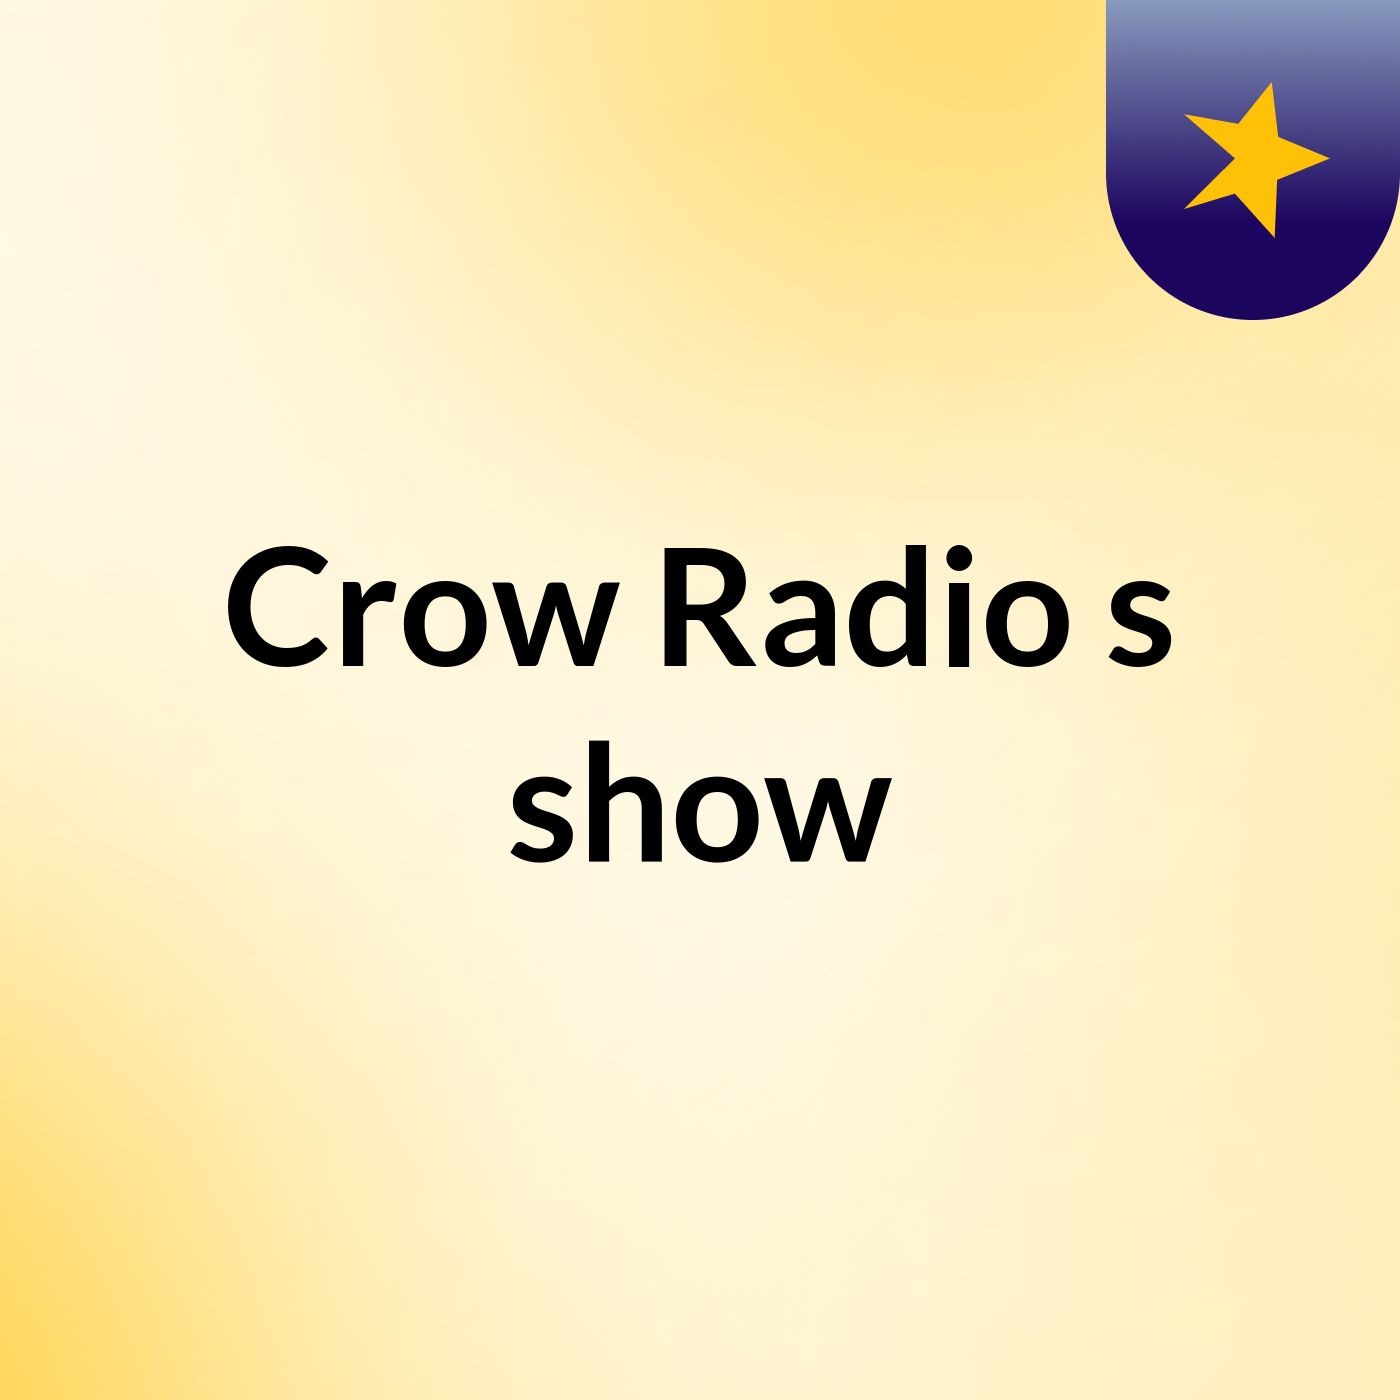 Crow Radio's show